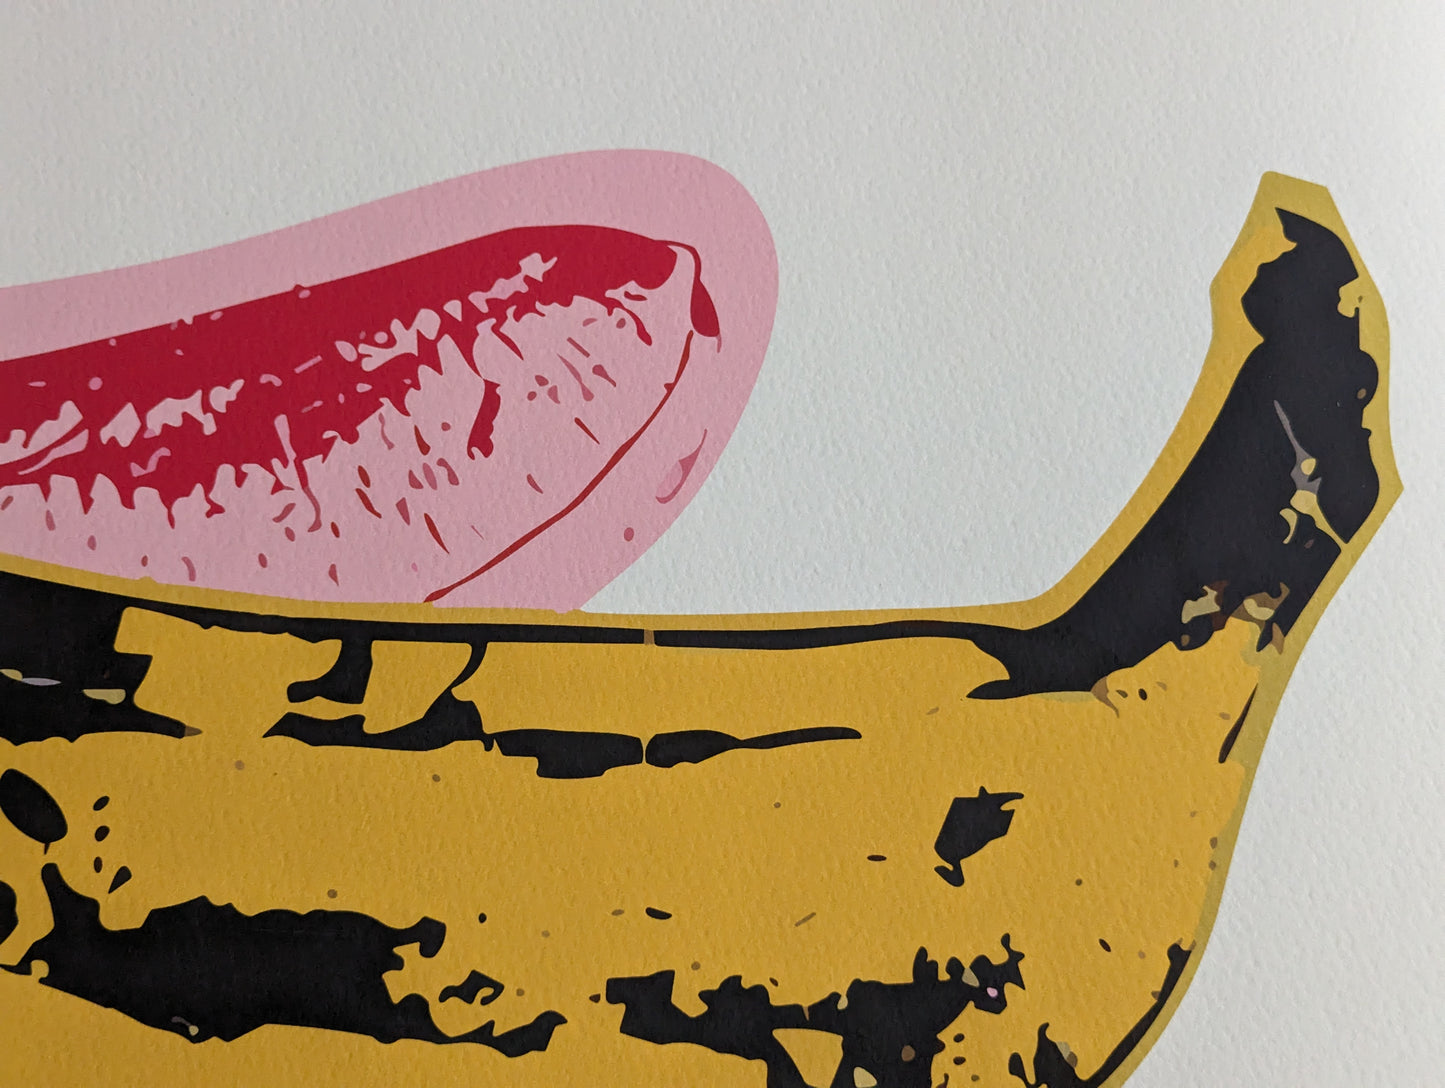 Andy Warhol - Banana II (1980)